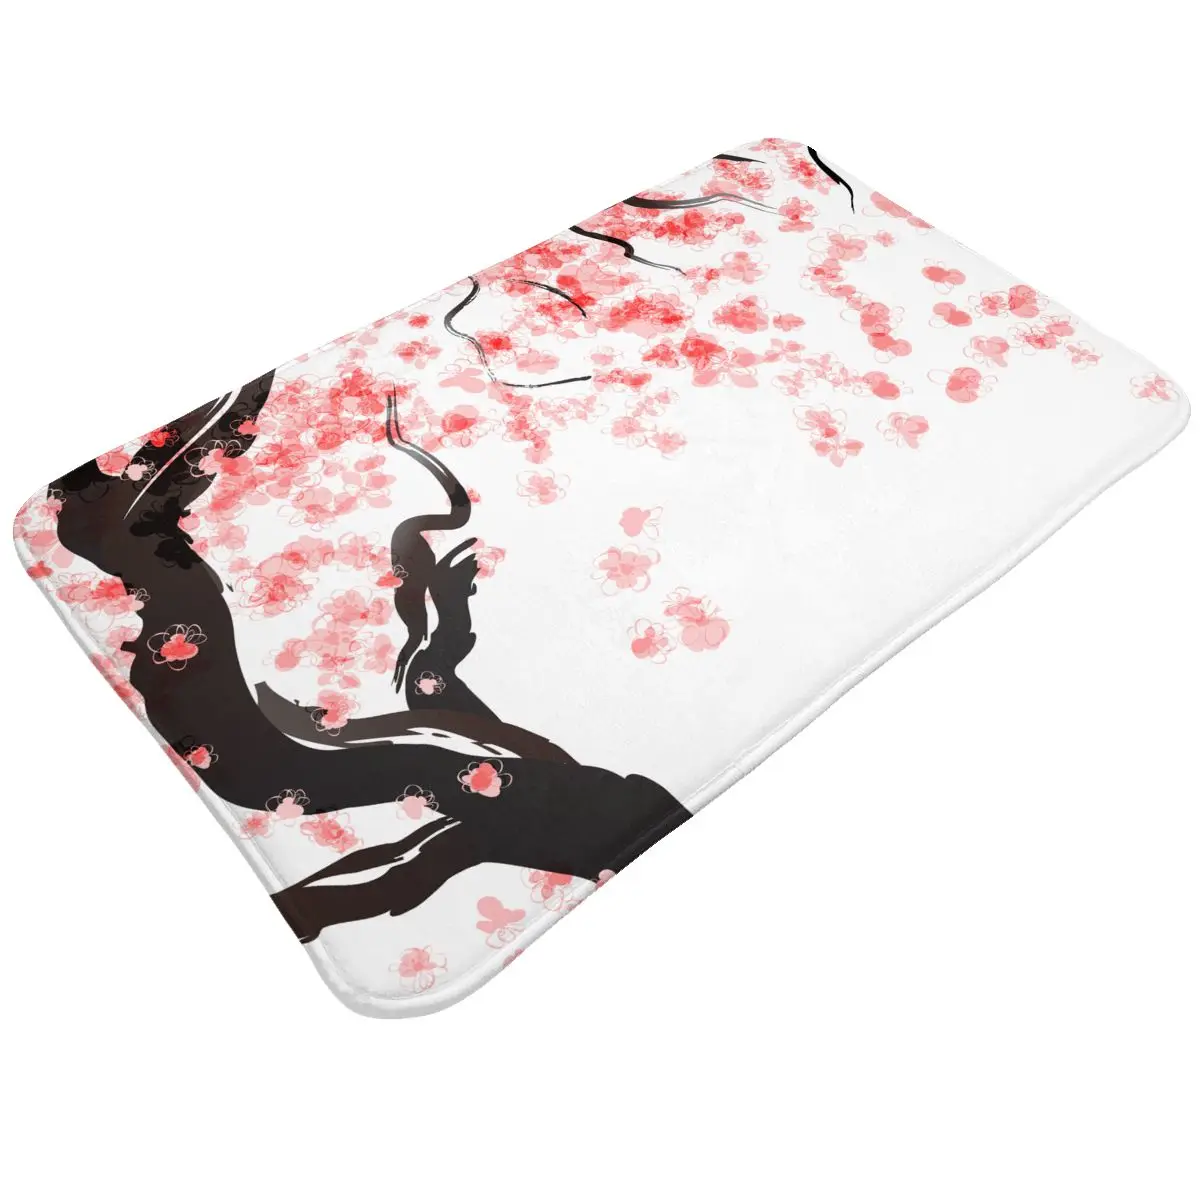 

Japanese Cherry Blossom Bathroom Rugs Soft Absorbent Bath Rugs, Non-Slip Shower Carpet Bath Mats for Bathroom Floor Tub Shower